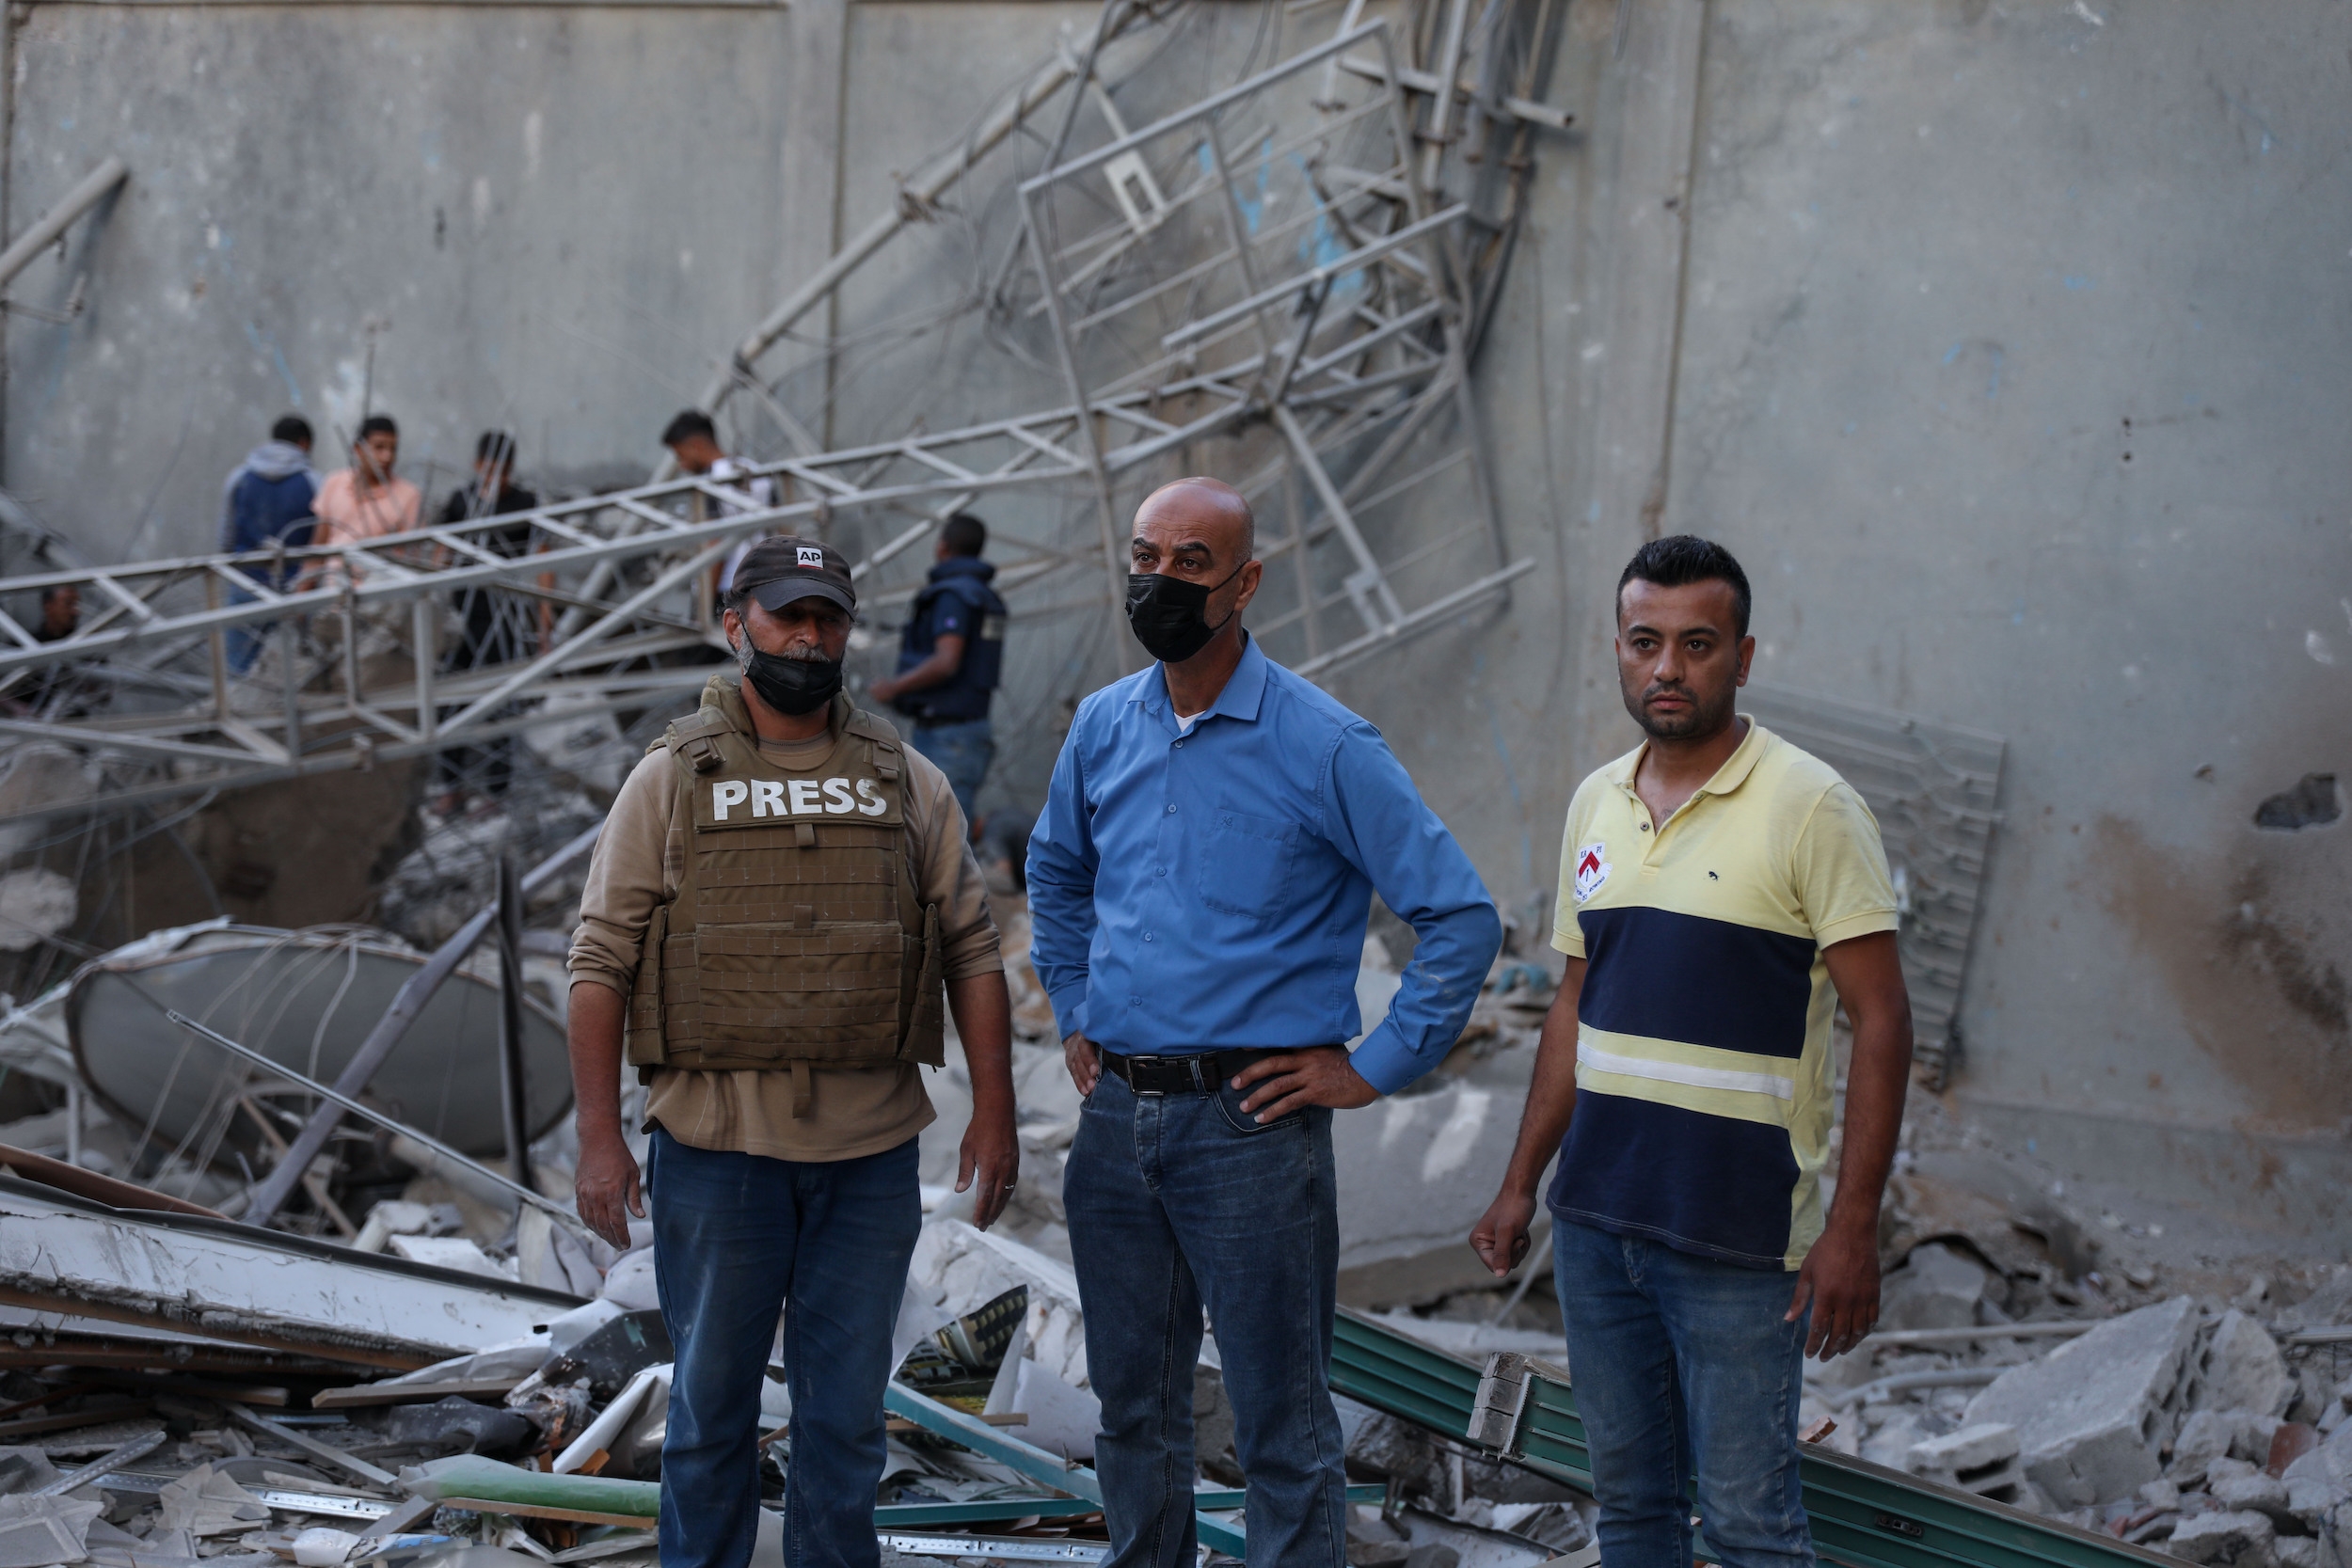 Journalists Gaza building bombing MEE Mohammed al-Hajjar 